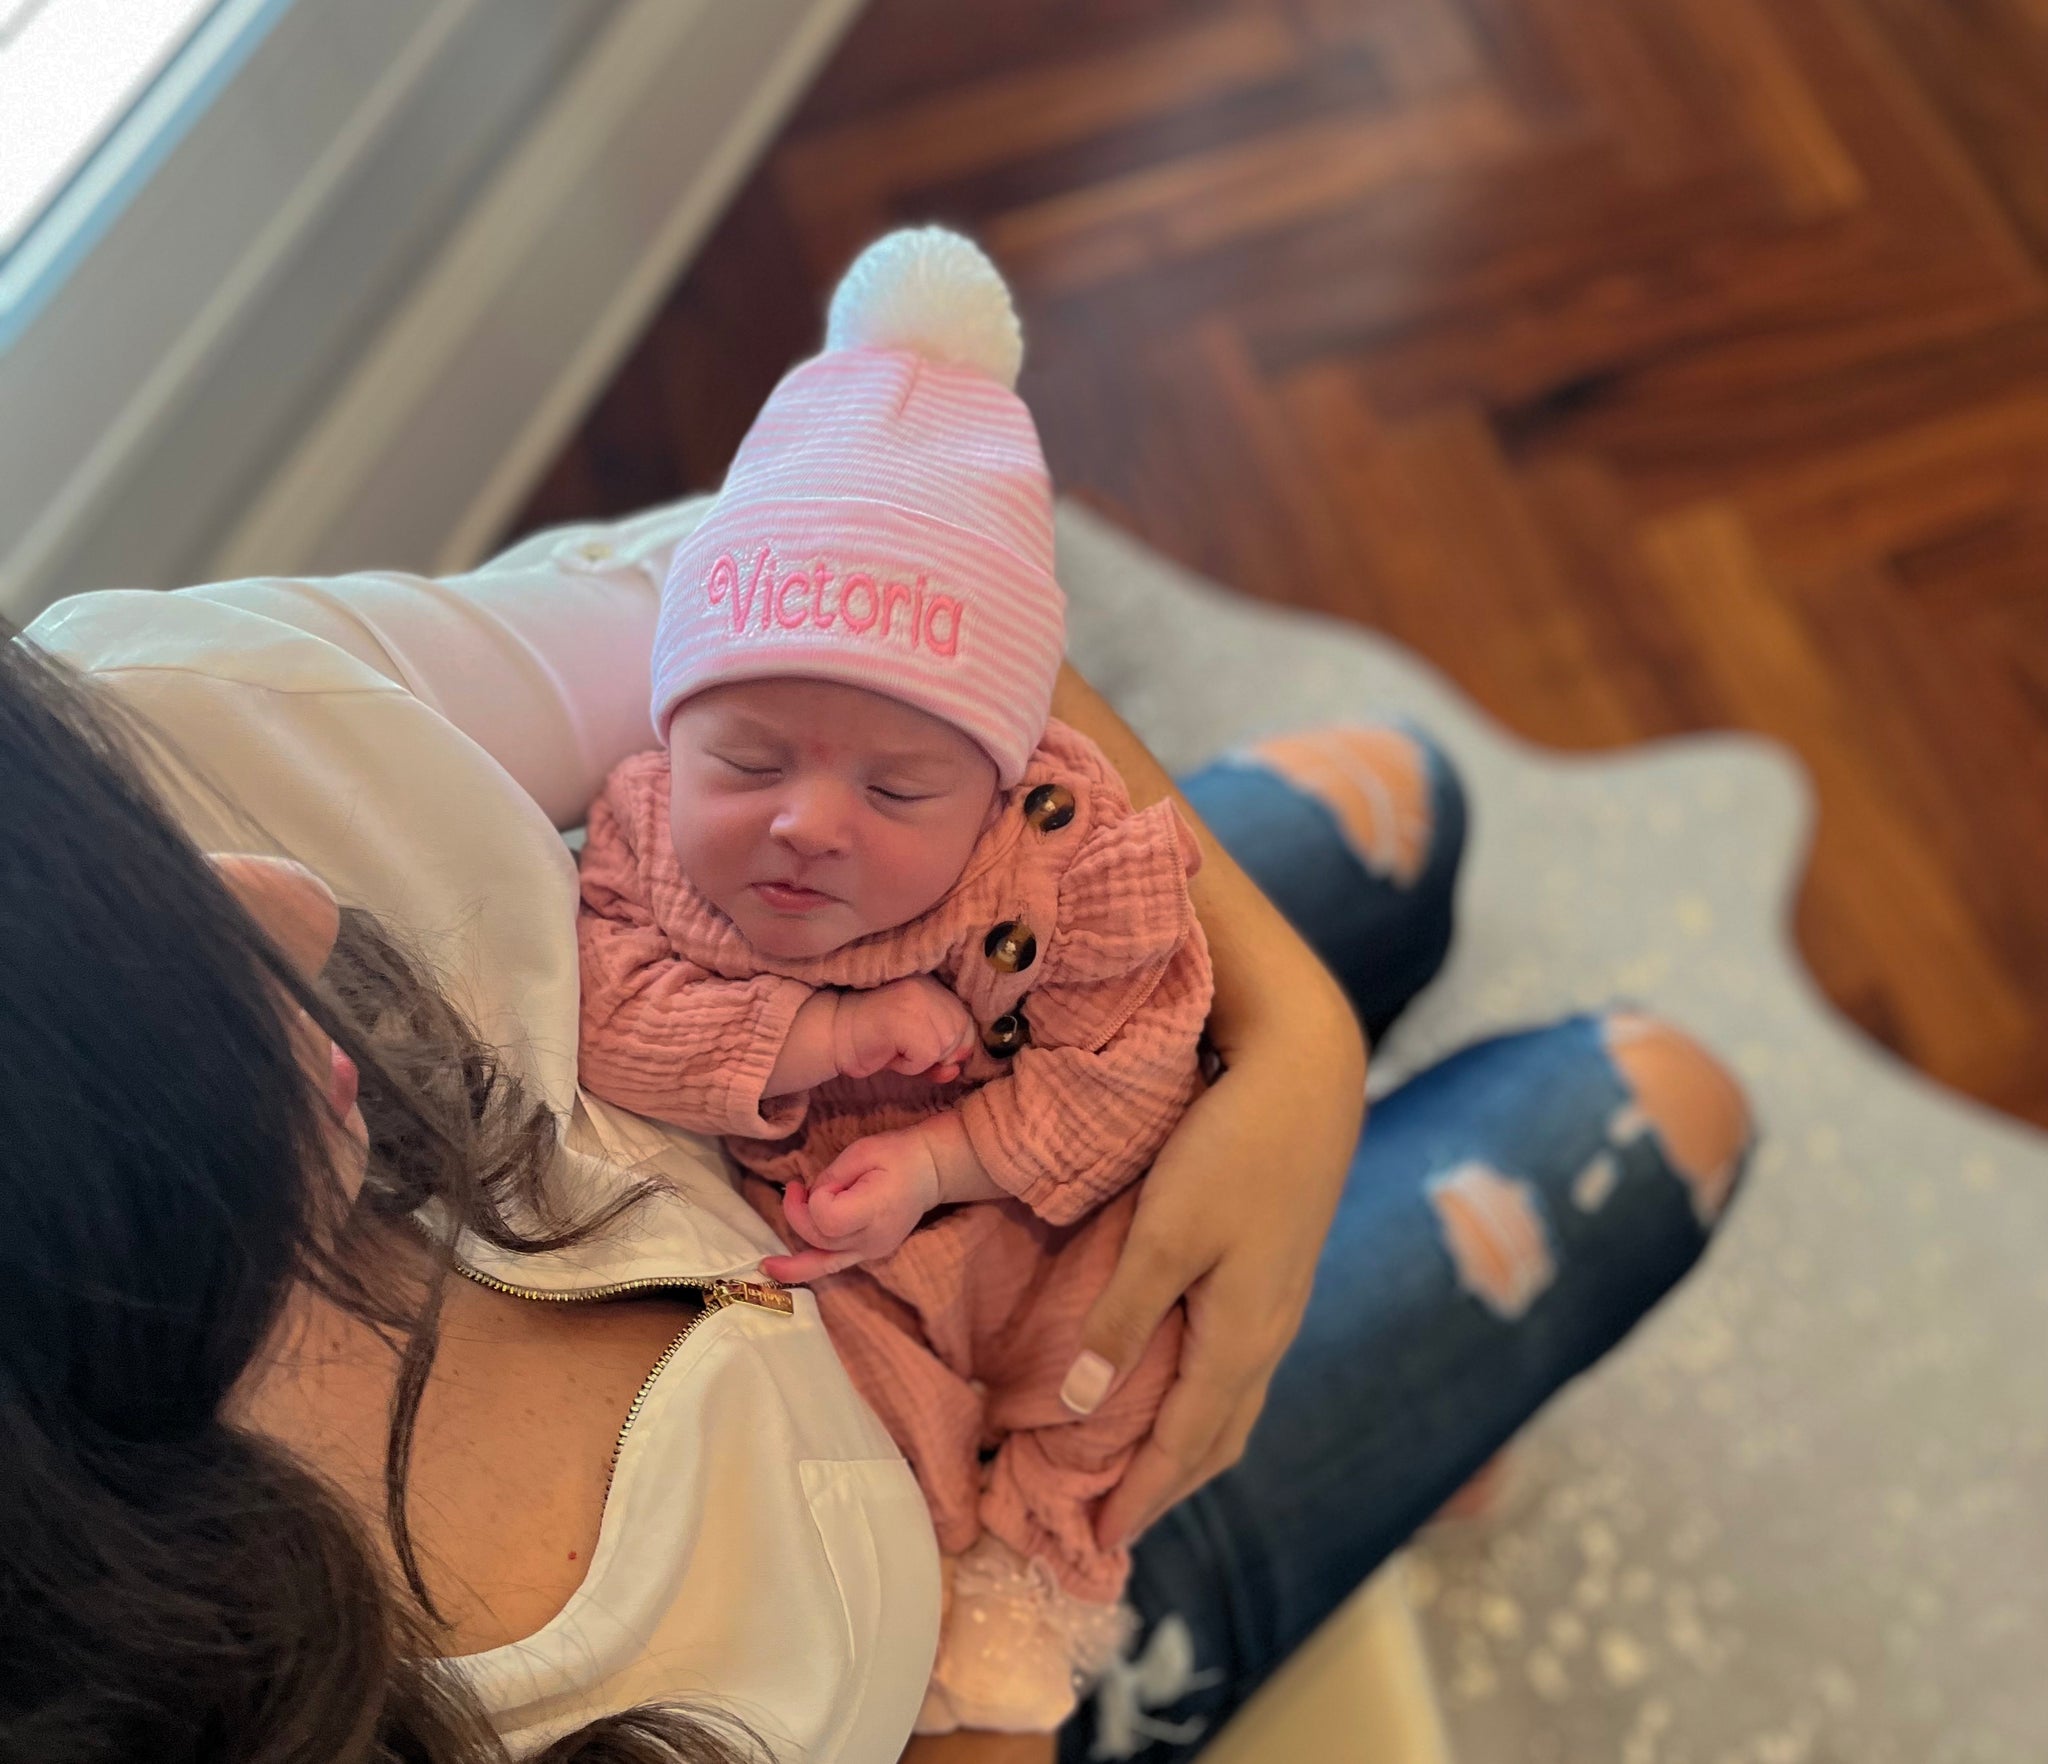 Pink and White Striped Newborn Baby Girl Hospital Nursery Beanie Hat W -  ilybean nursery beanies